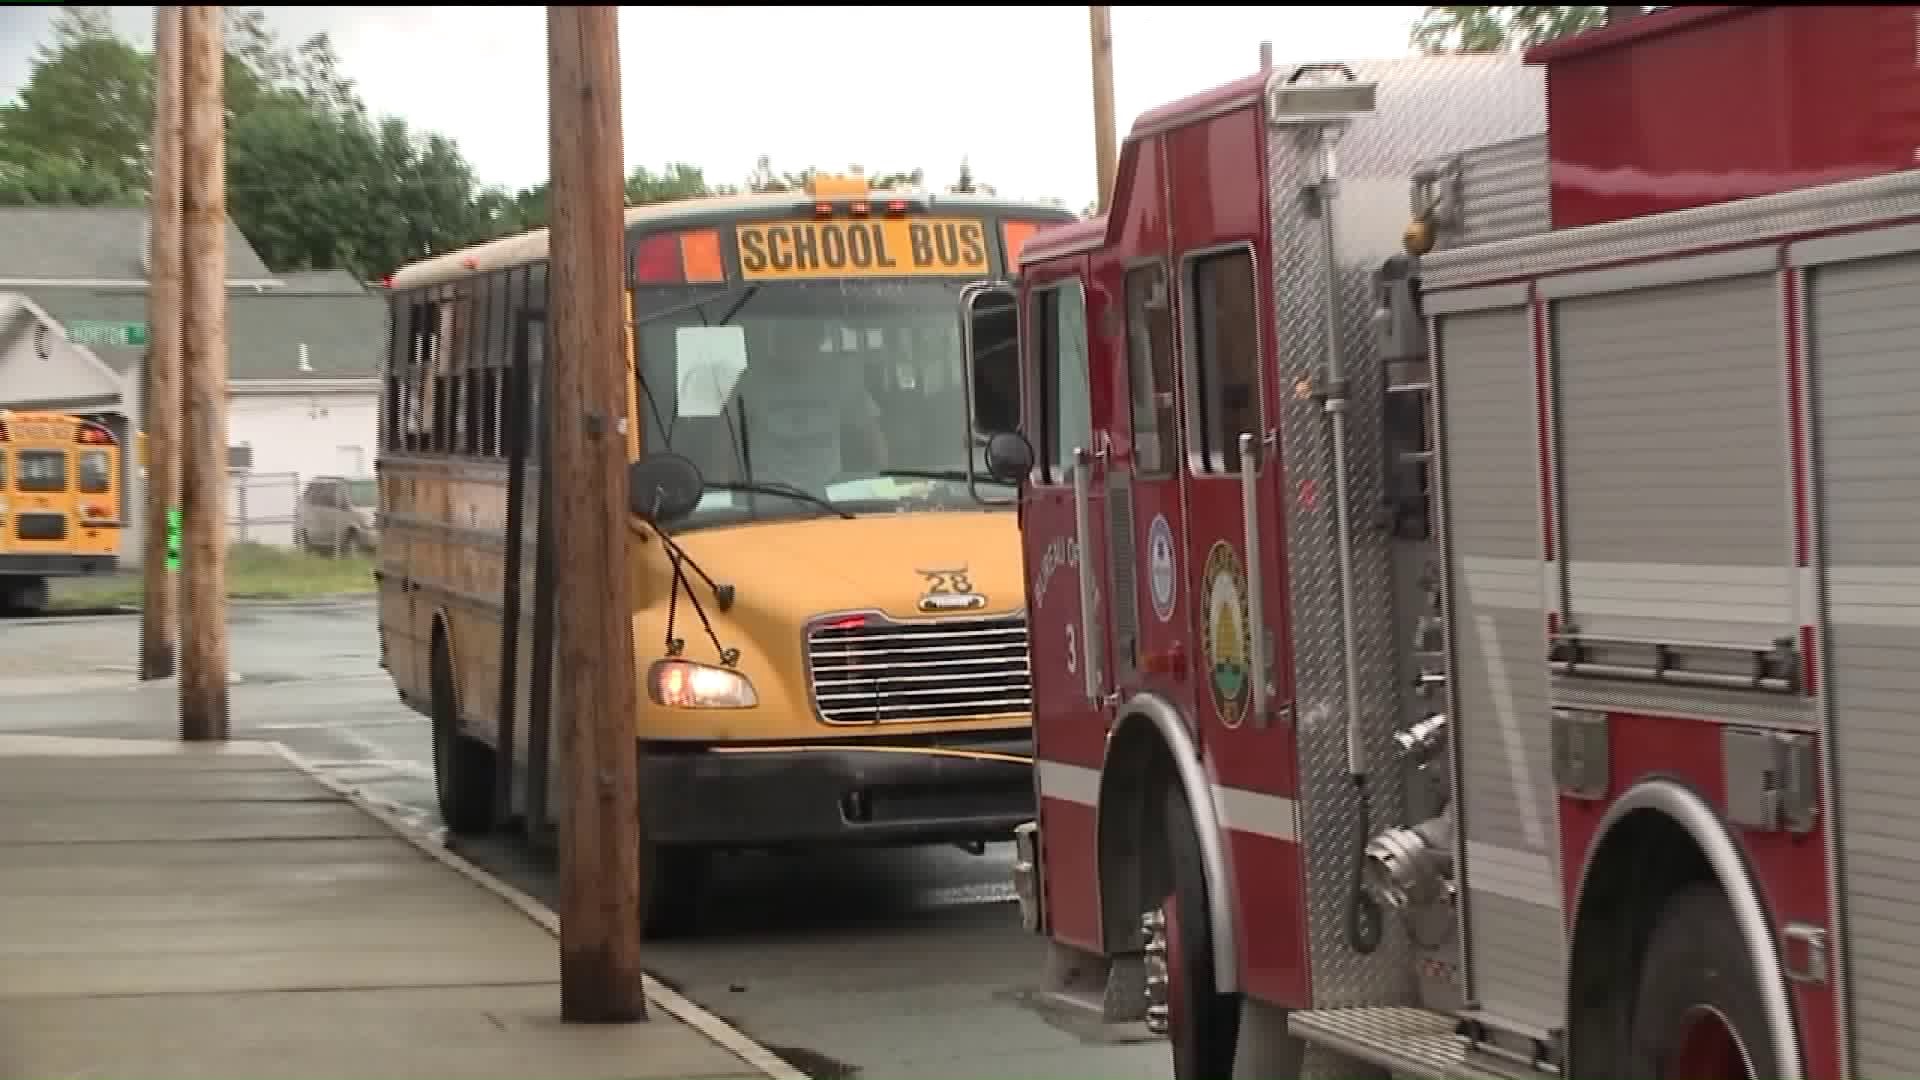 School Bus Involved in Crash in Wilkes-Barre